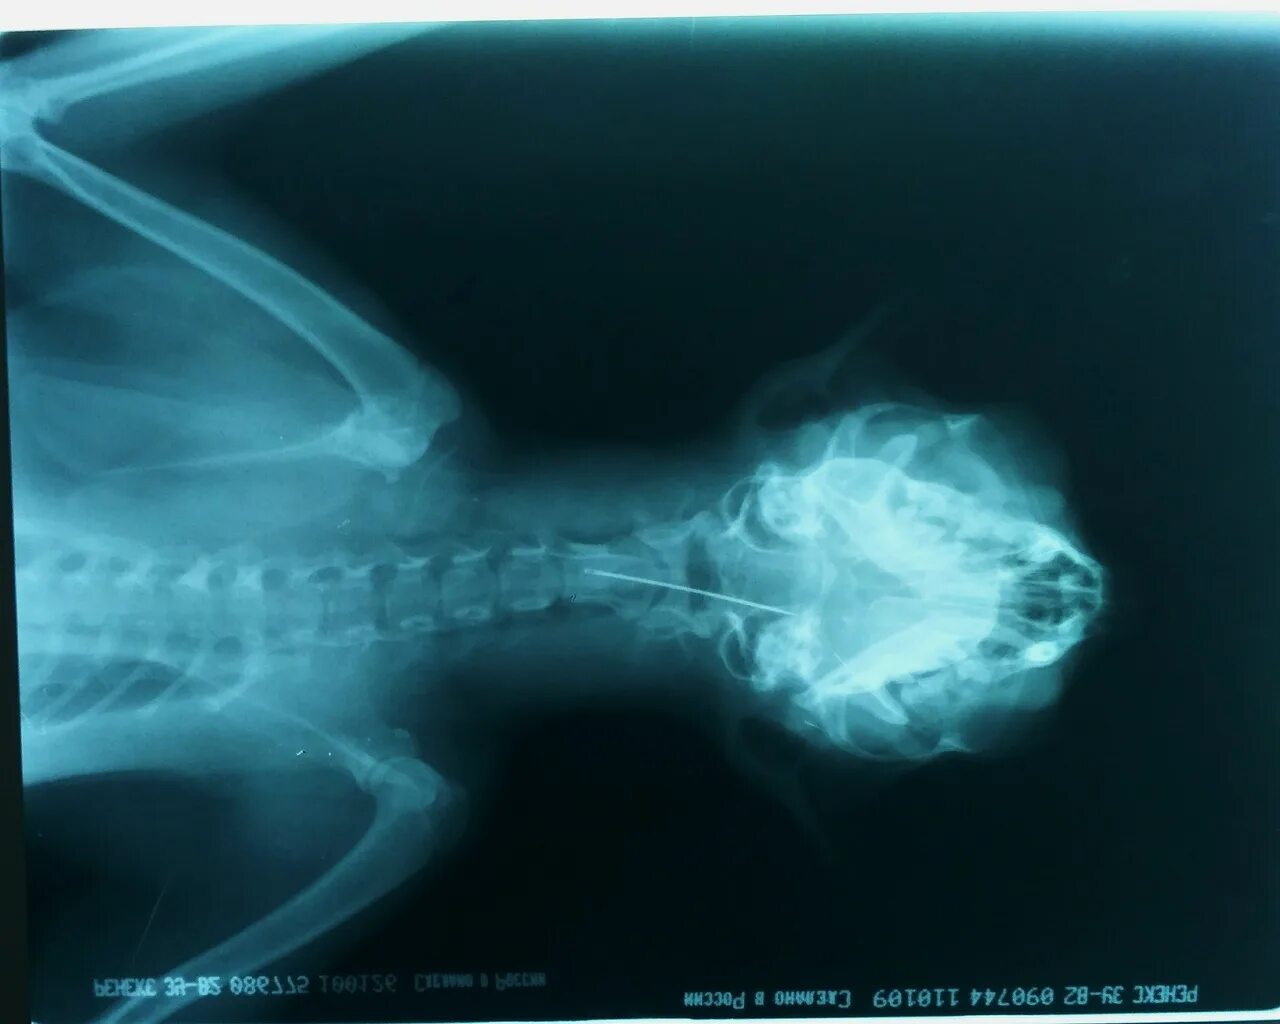 Игла кошки. Кошка проглотила нитку рентген.